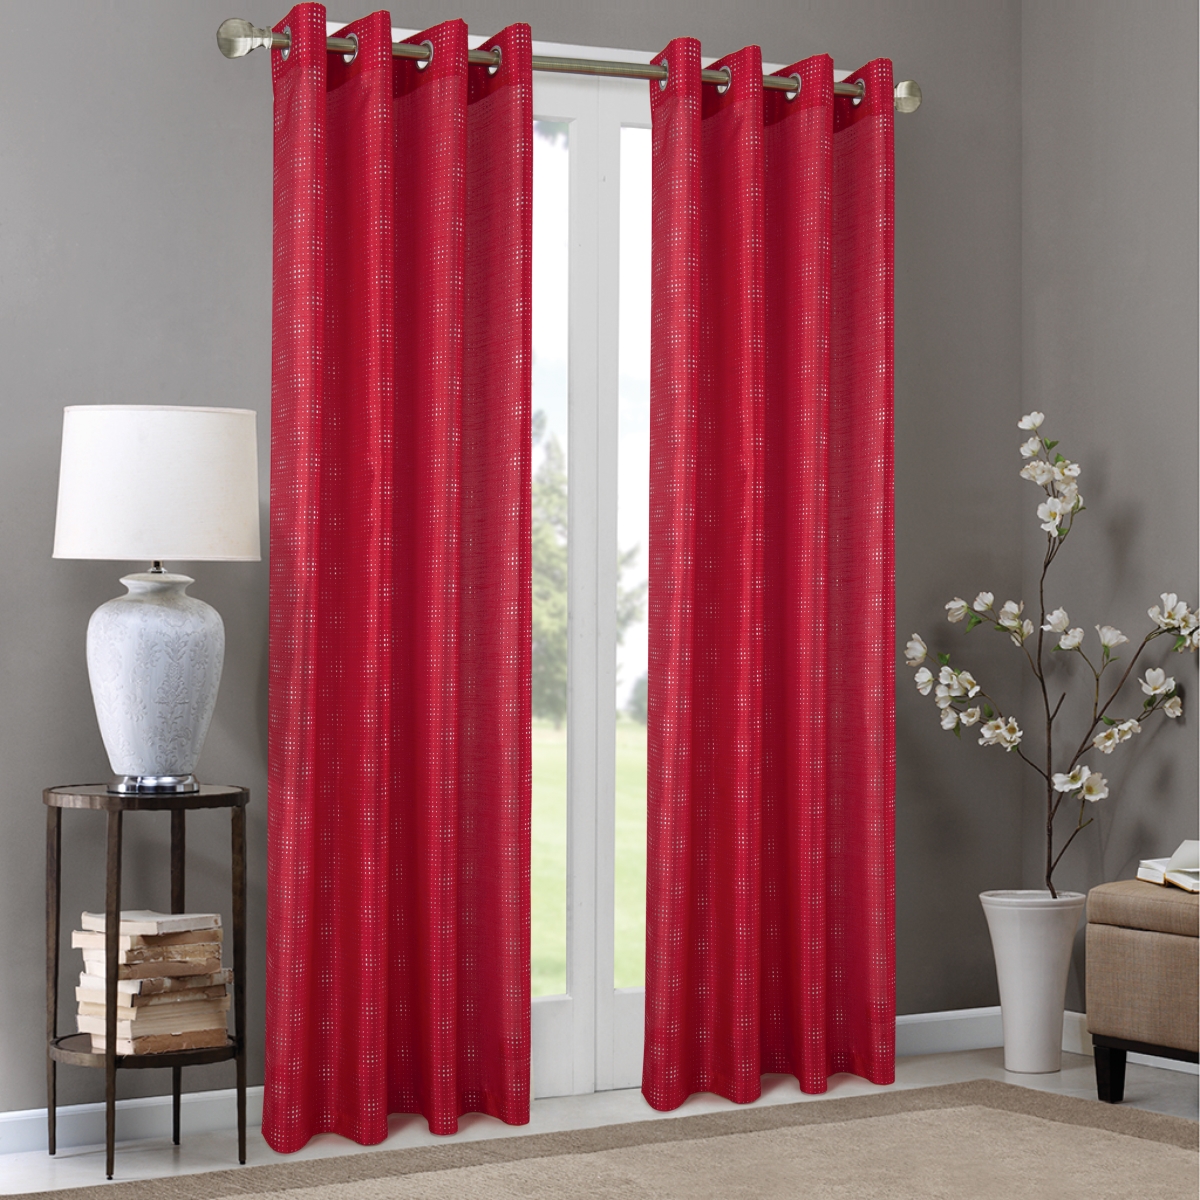 Pnc22377 54 X 90 In. Carolina Metallic Geometric Faux Silk Grommet Single Curtain Panel, Red